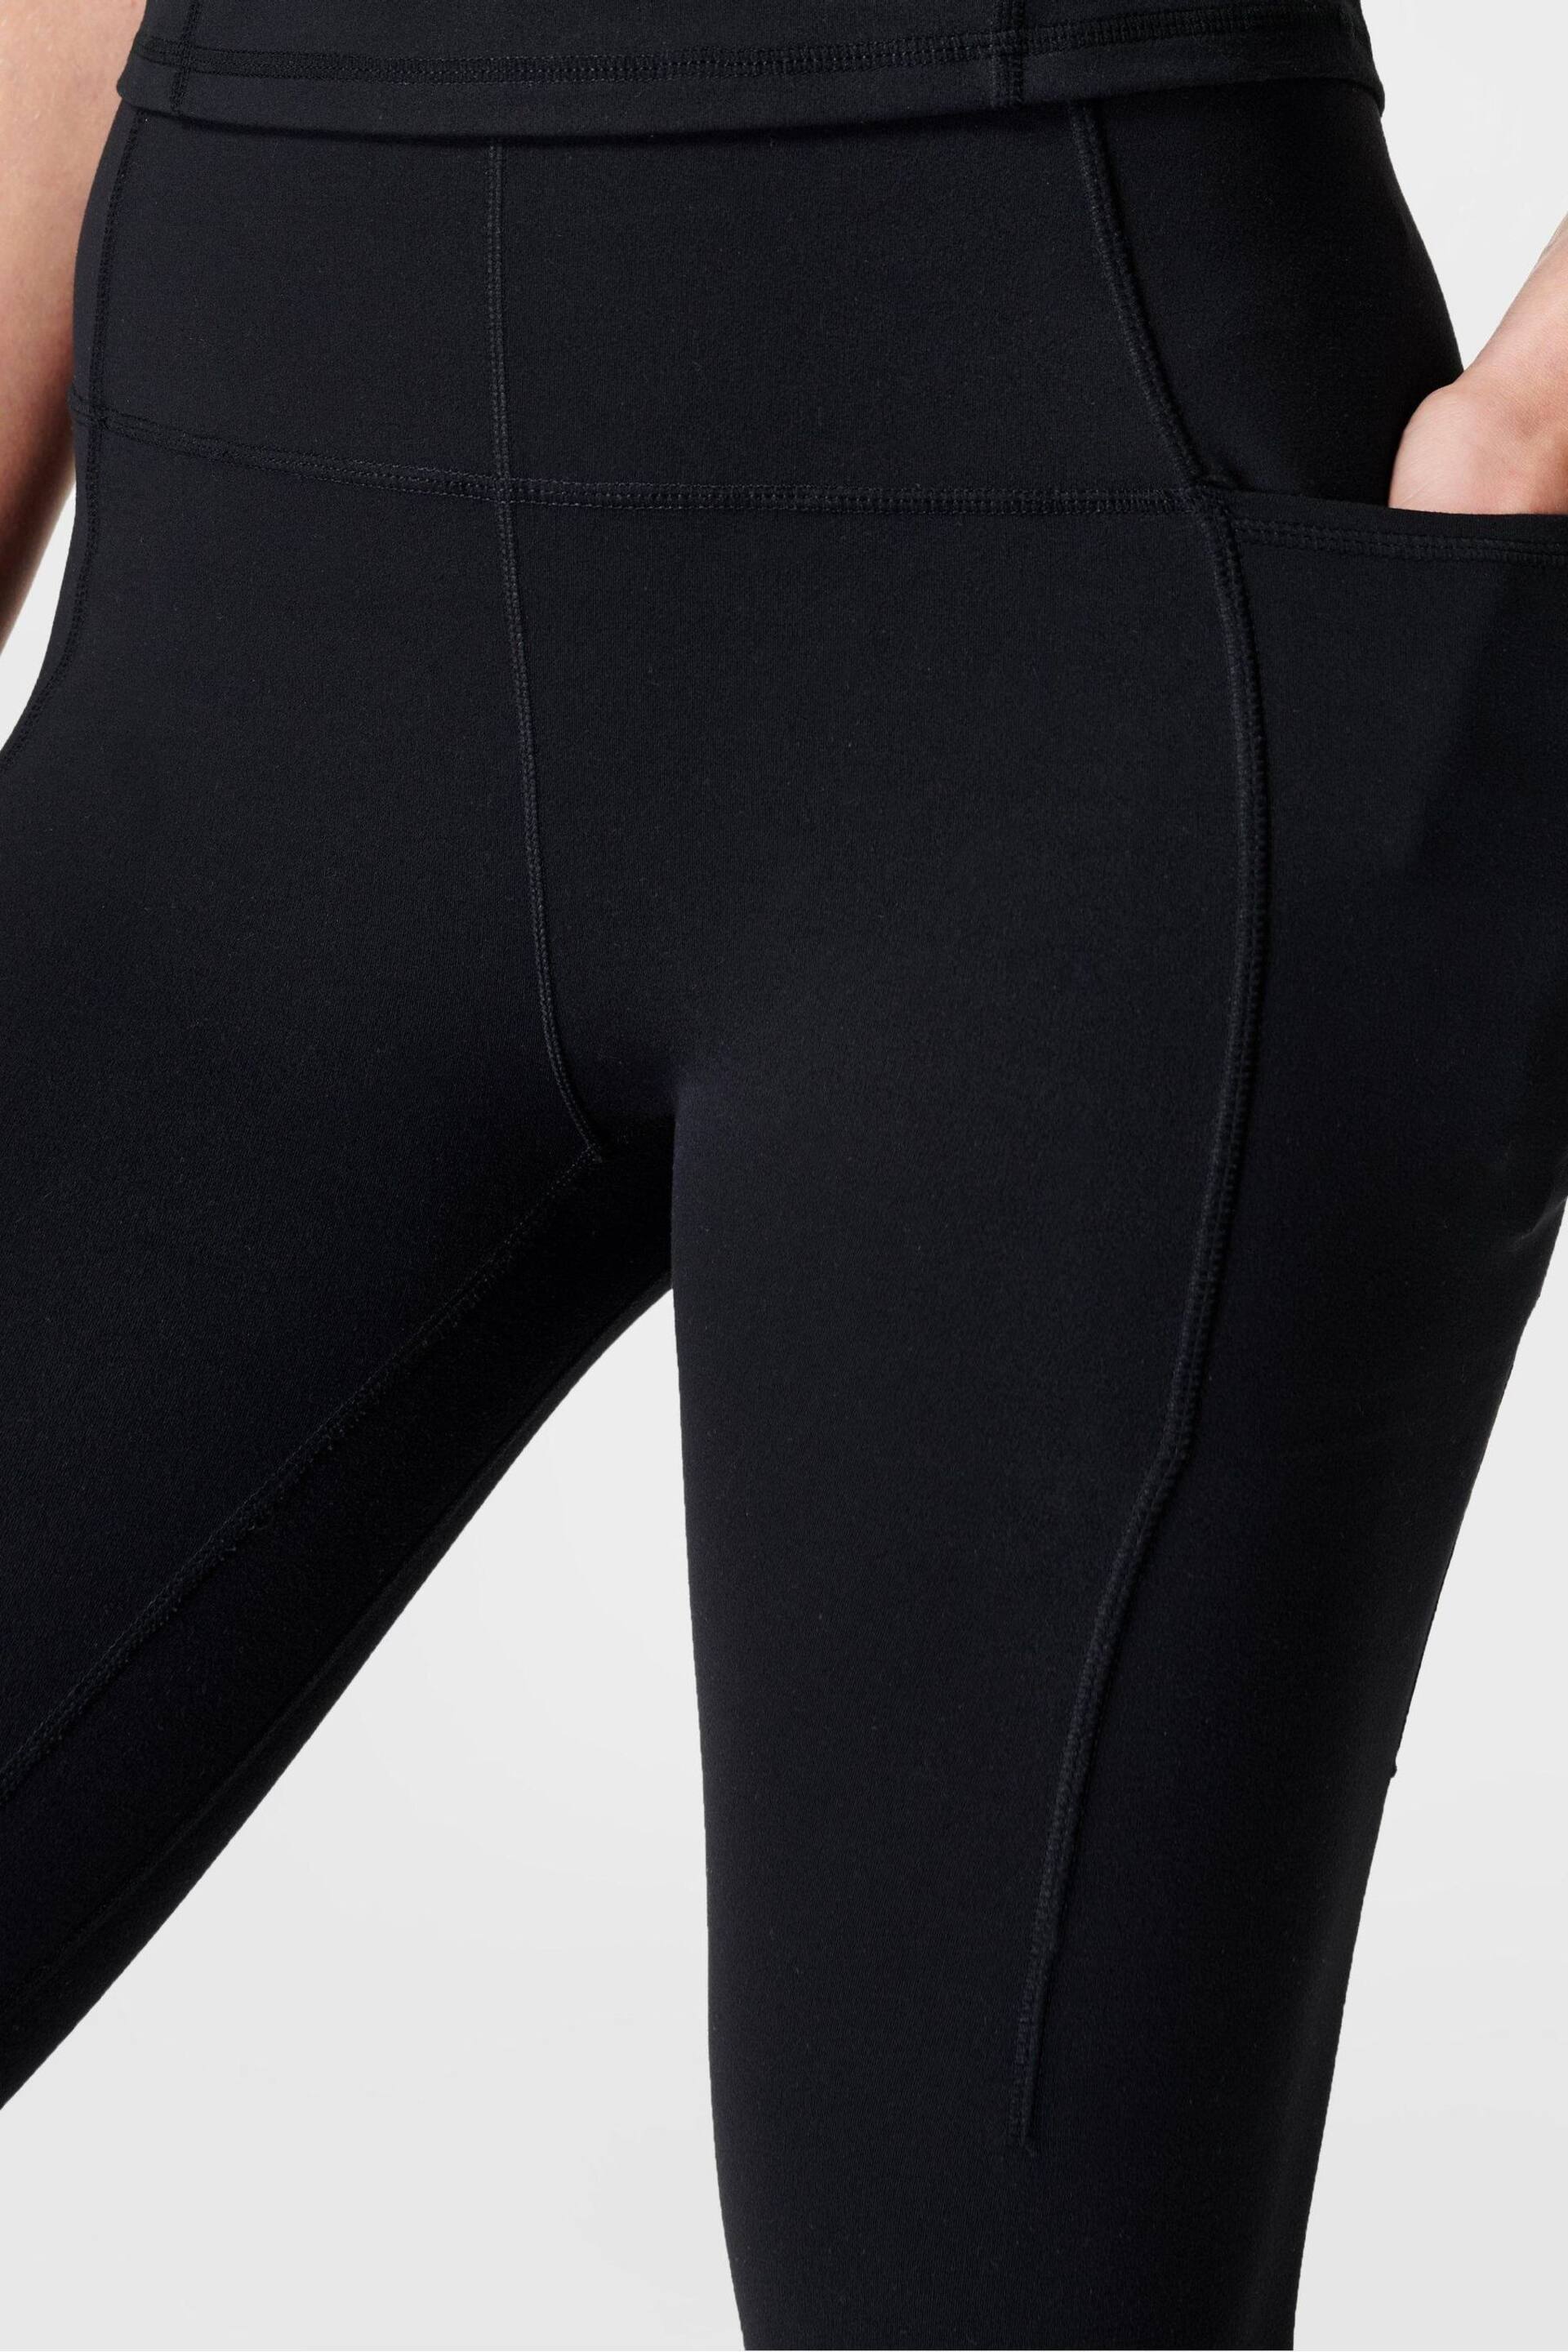 Sweaty Betty Black Full Length Super Soft Yoga Leggings - Image 5 of 8